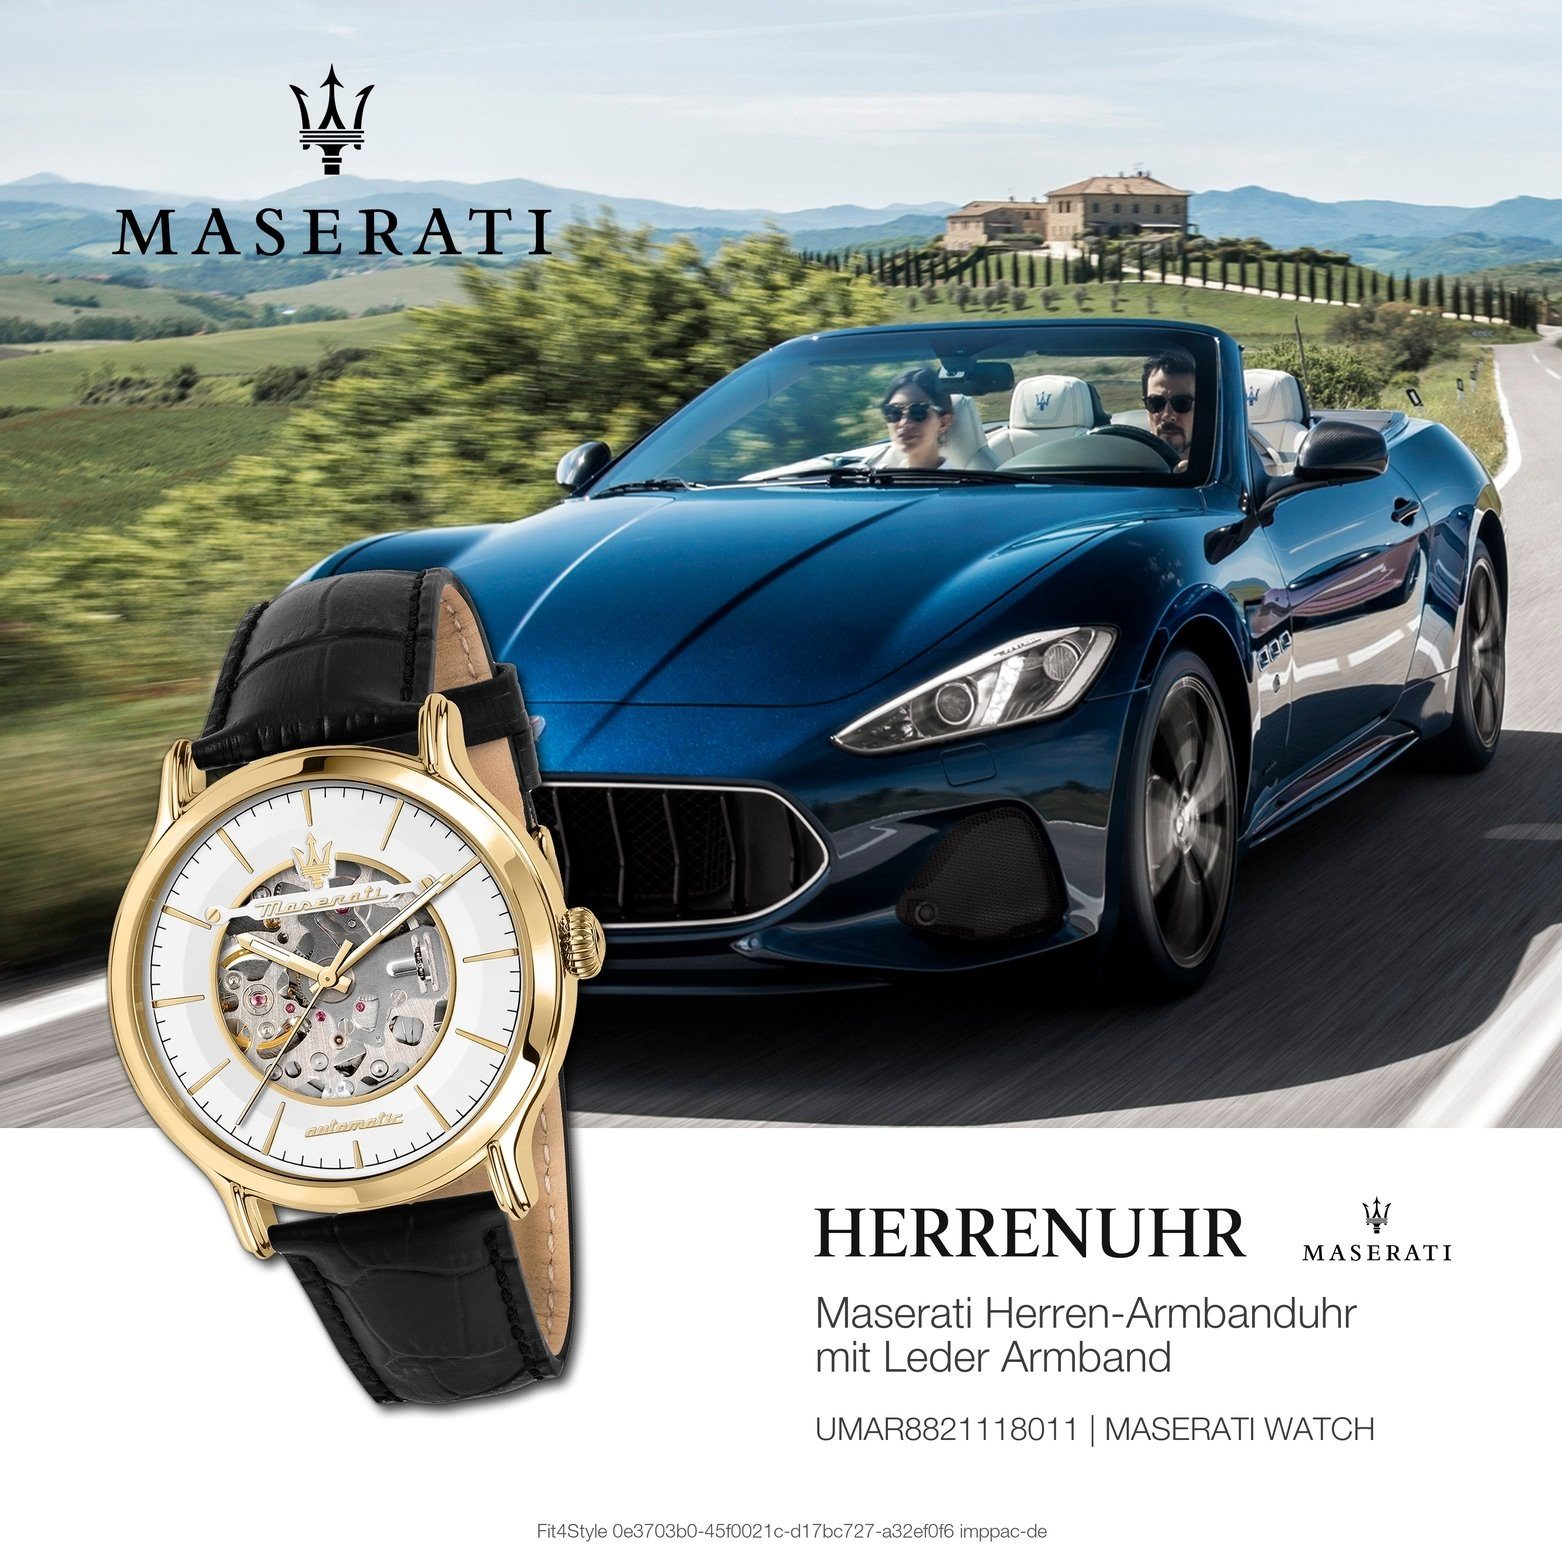 Maserati Time MASERATI Herren Epoca, 42mm) Italy Maserati groß Herrenuhr Made-In Quarzuhr Lederarmband, rund, (ca. Armband